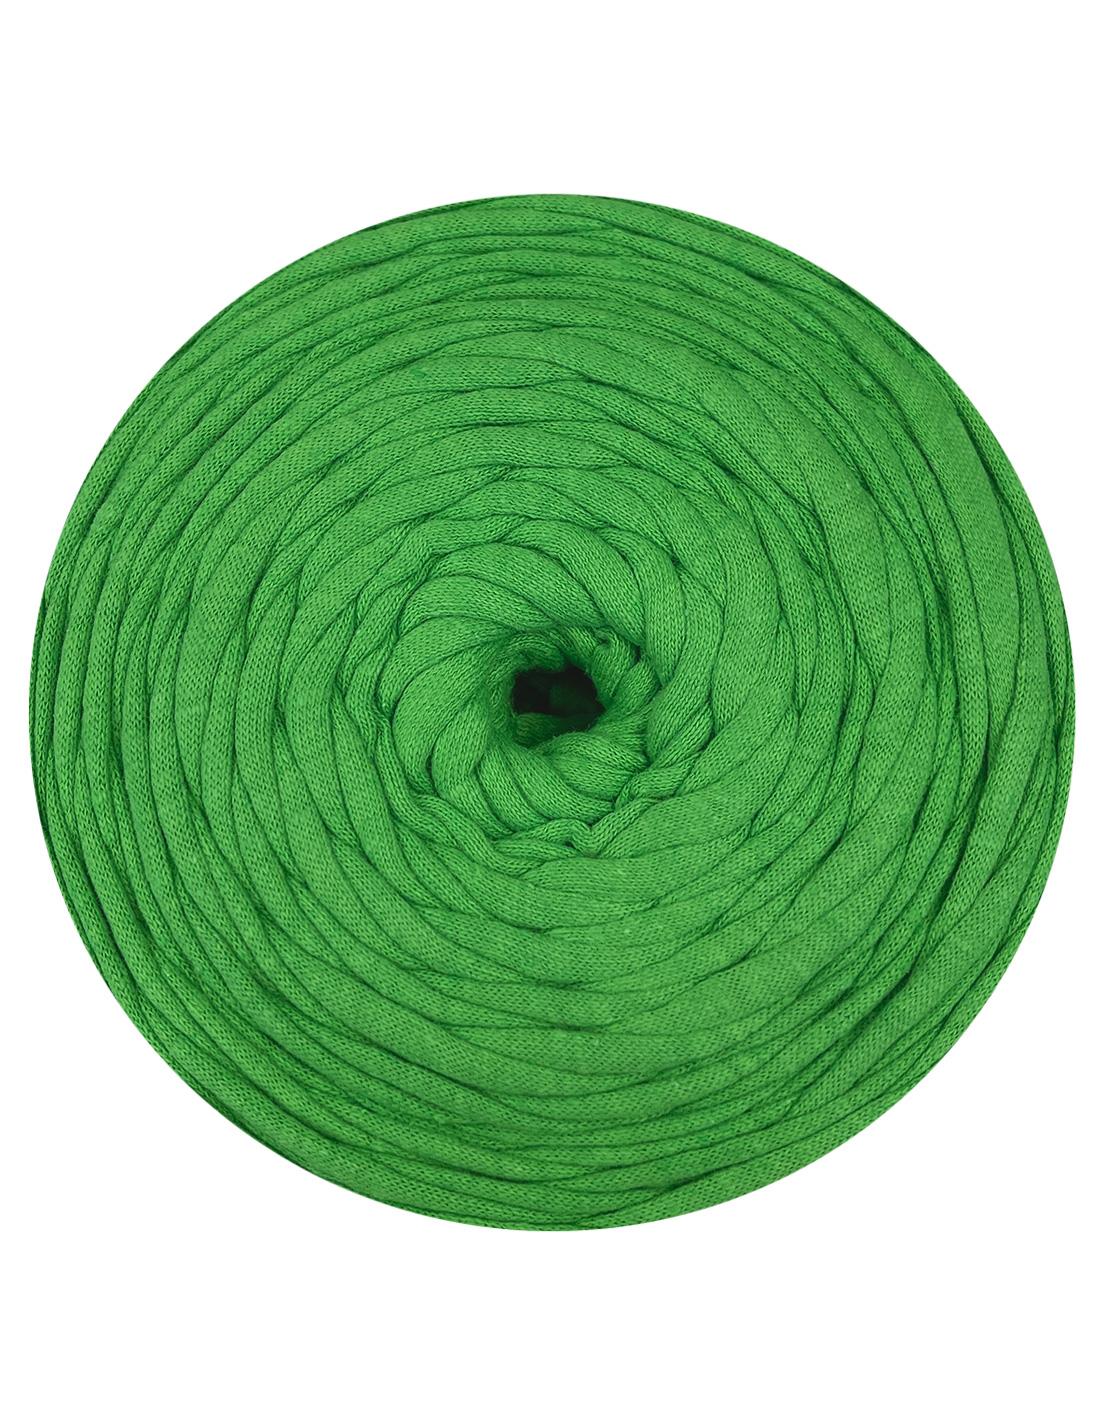 Parakeet green t-shirt yarn by Hoooked Zpagetti (100-120m)